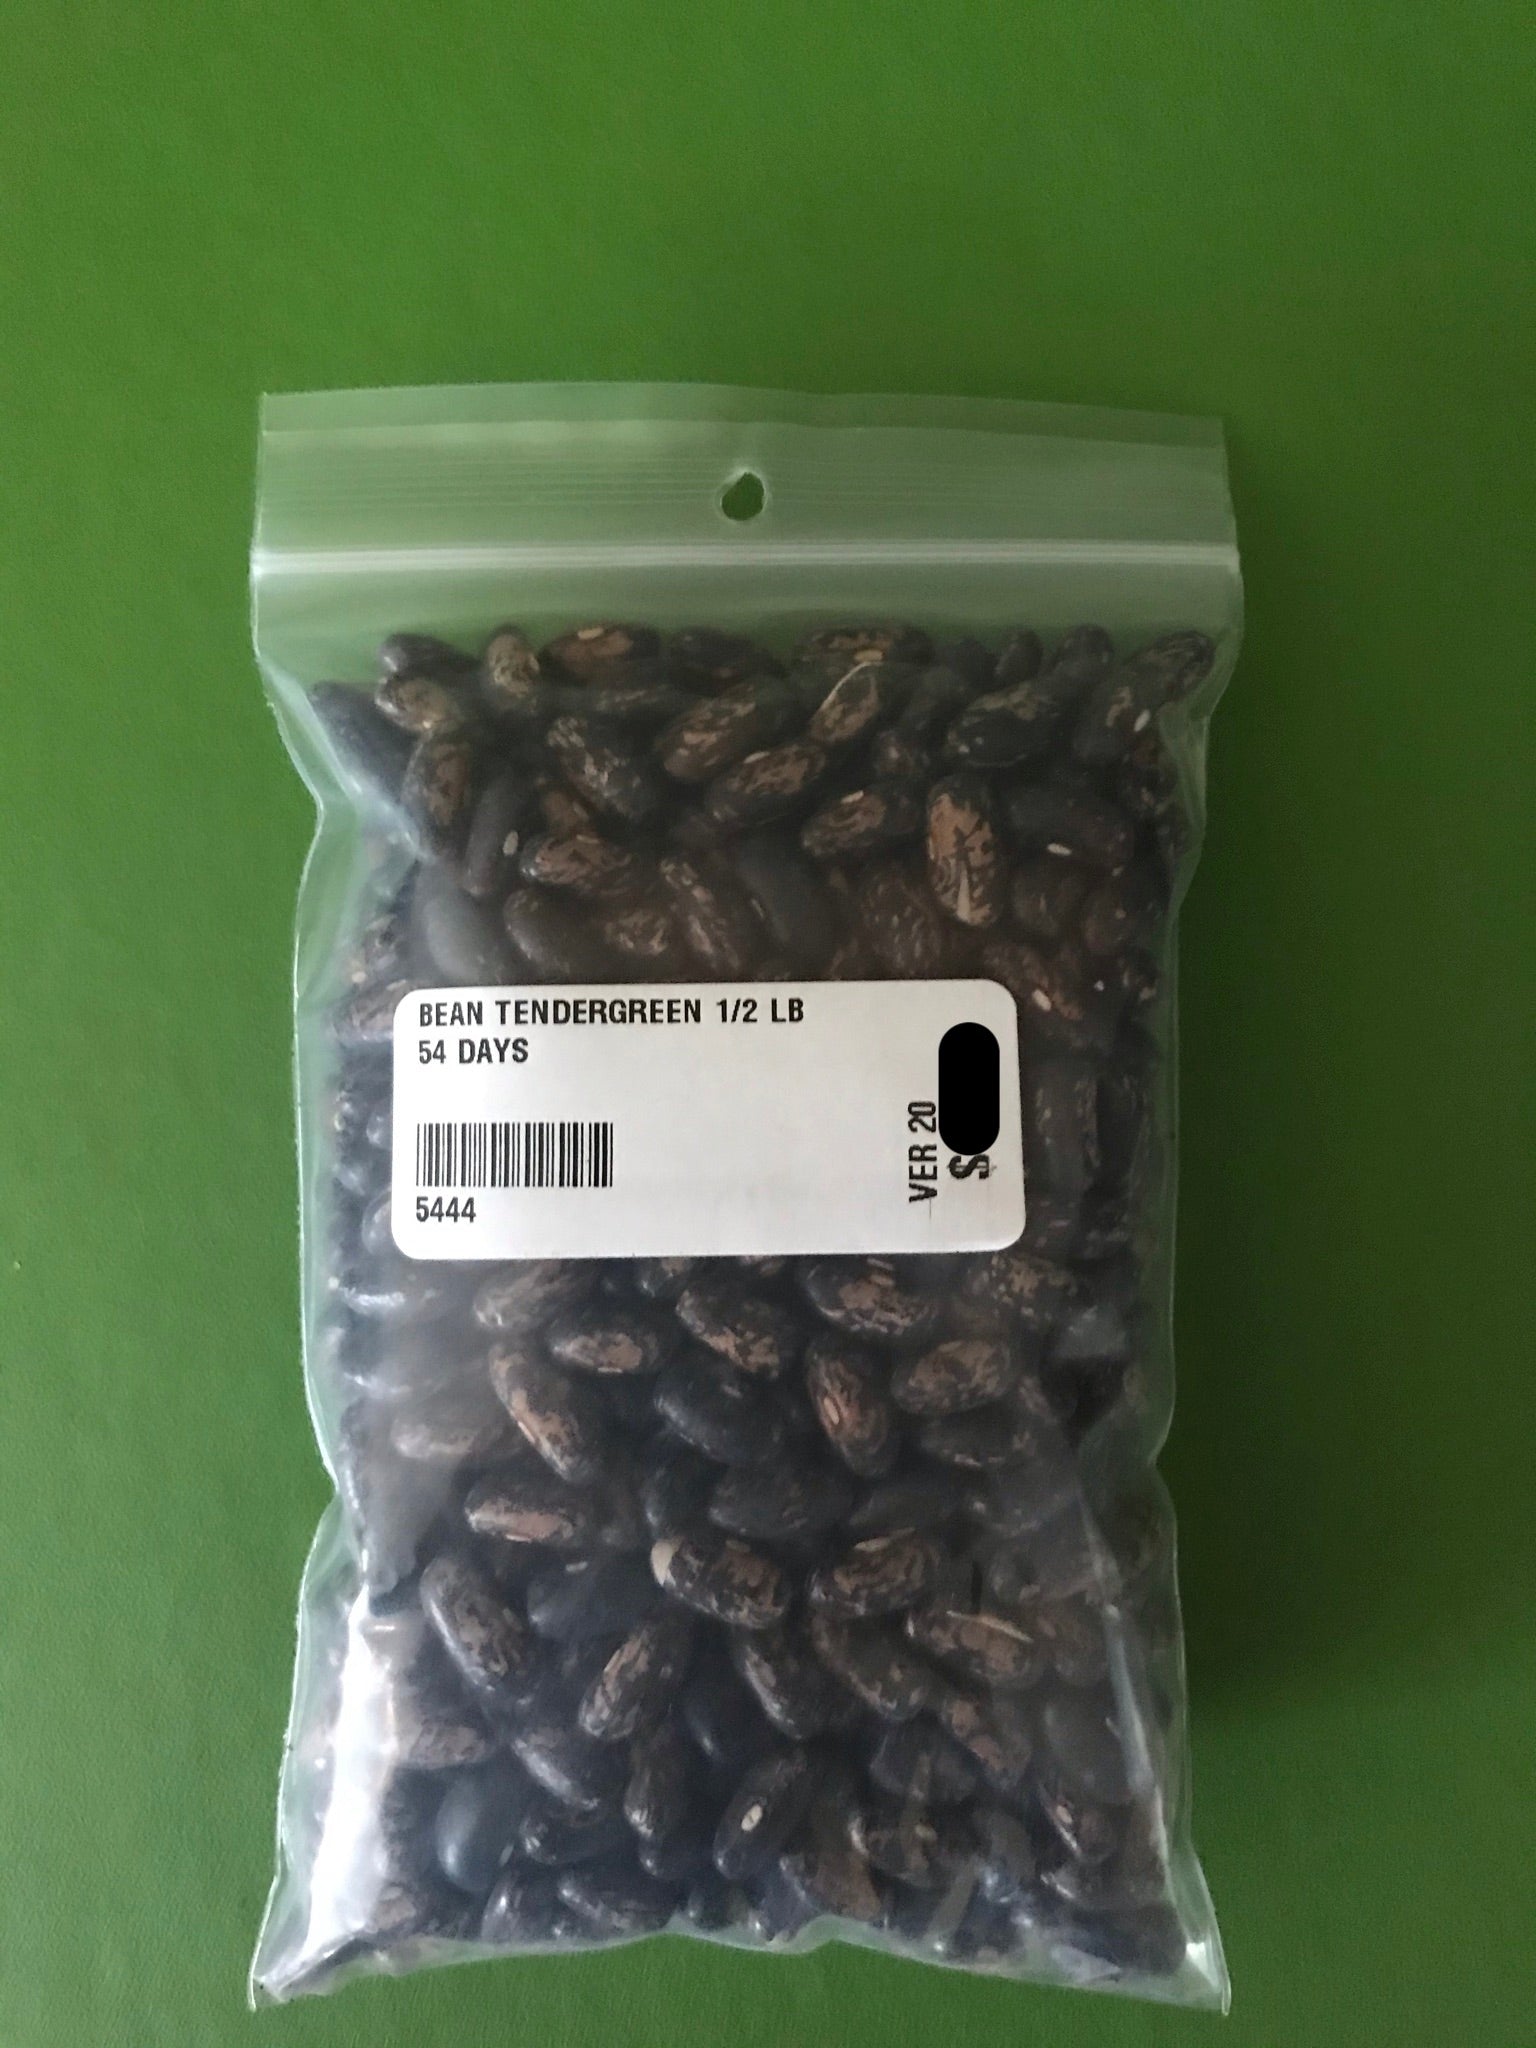 Tendergreen Bush Bean Seeds (54 Days) - 1/2 lb - Bulk